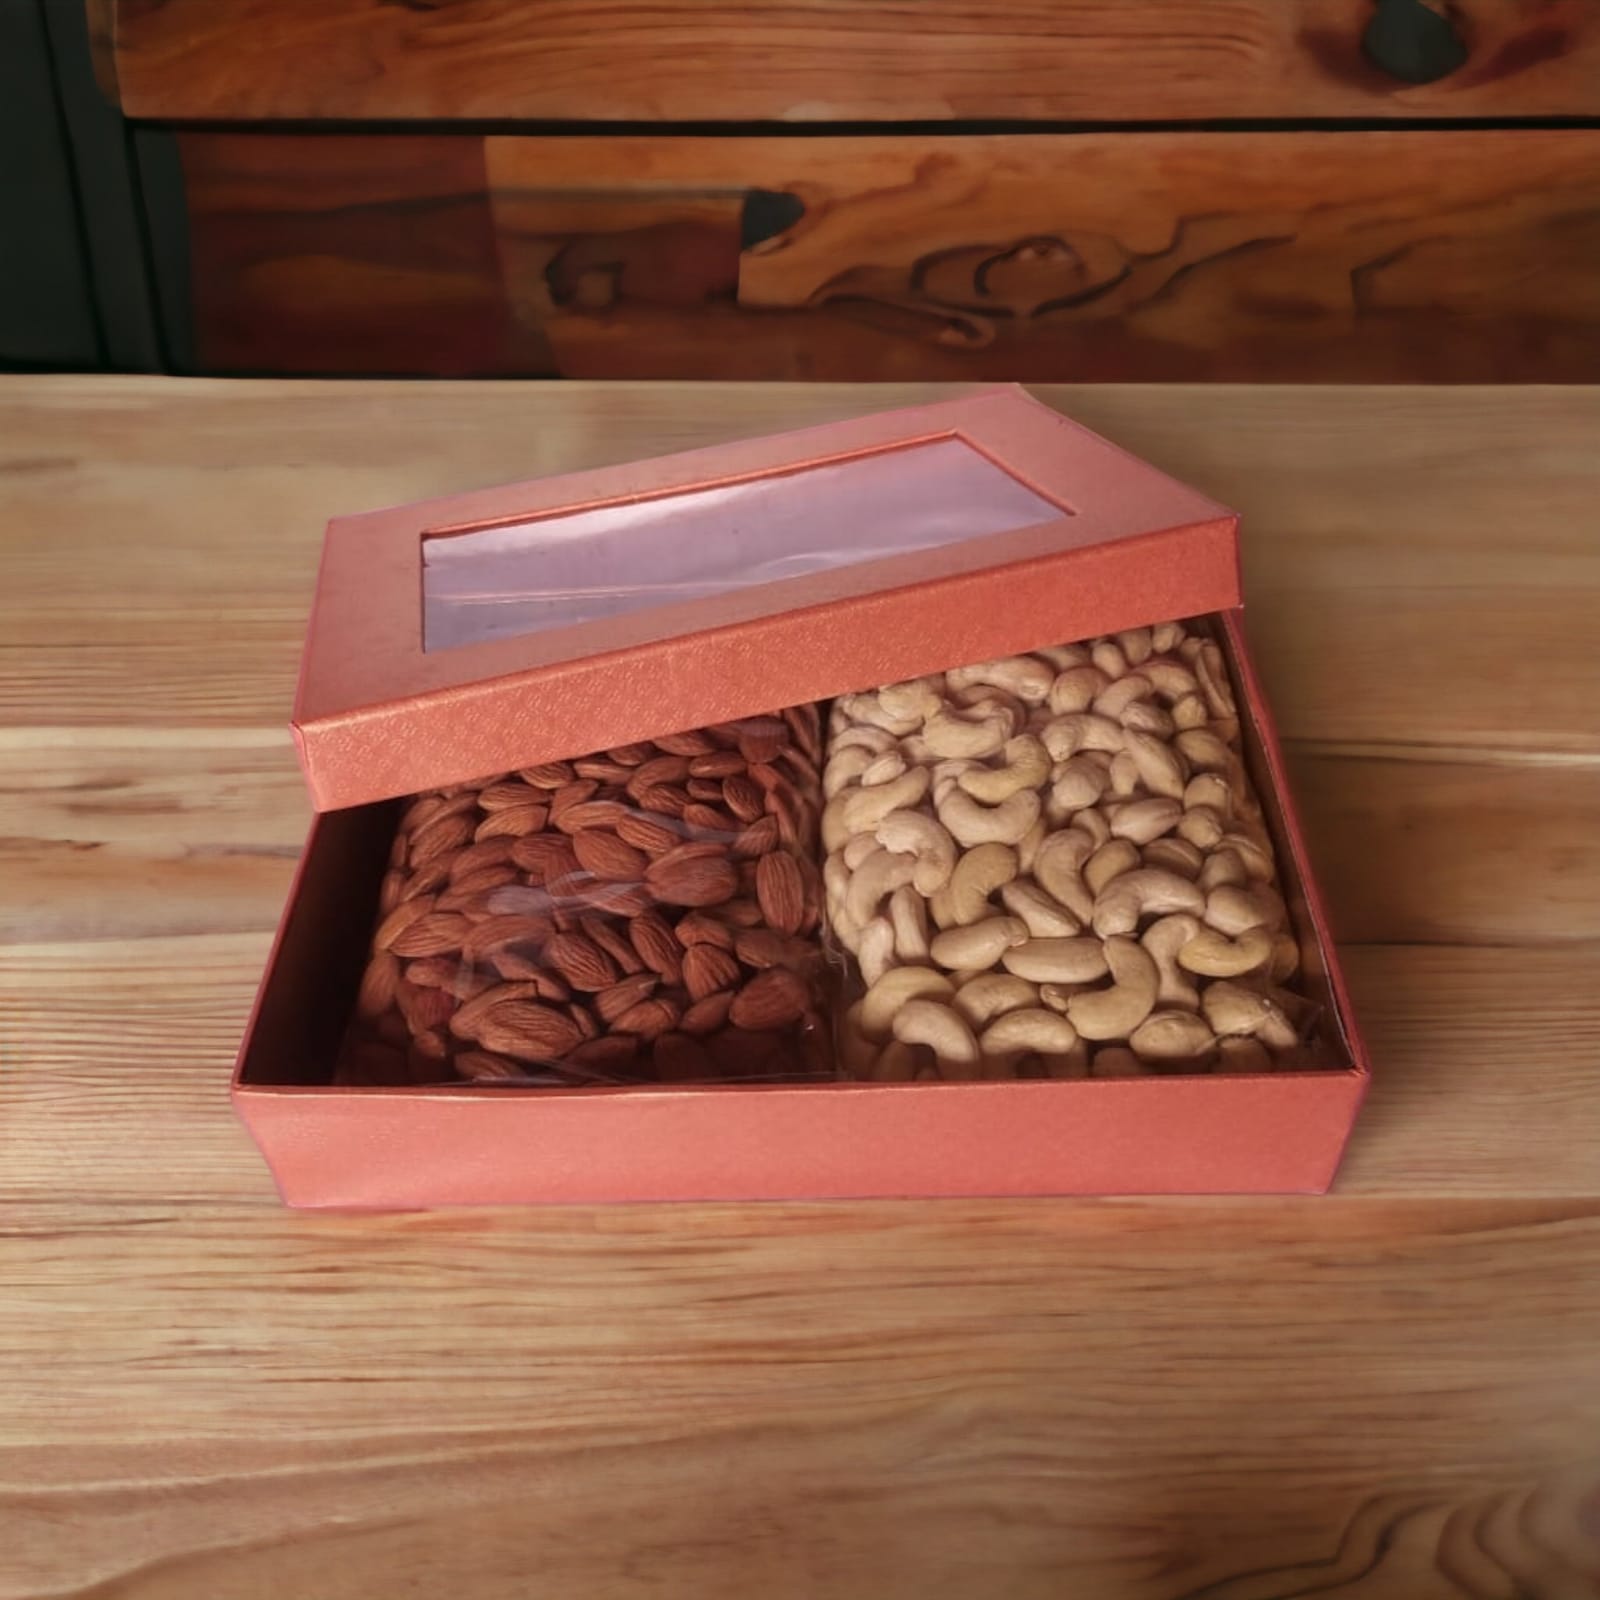 Super Family Diwali Crackers Gift Box (20 Items)